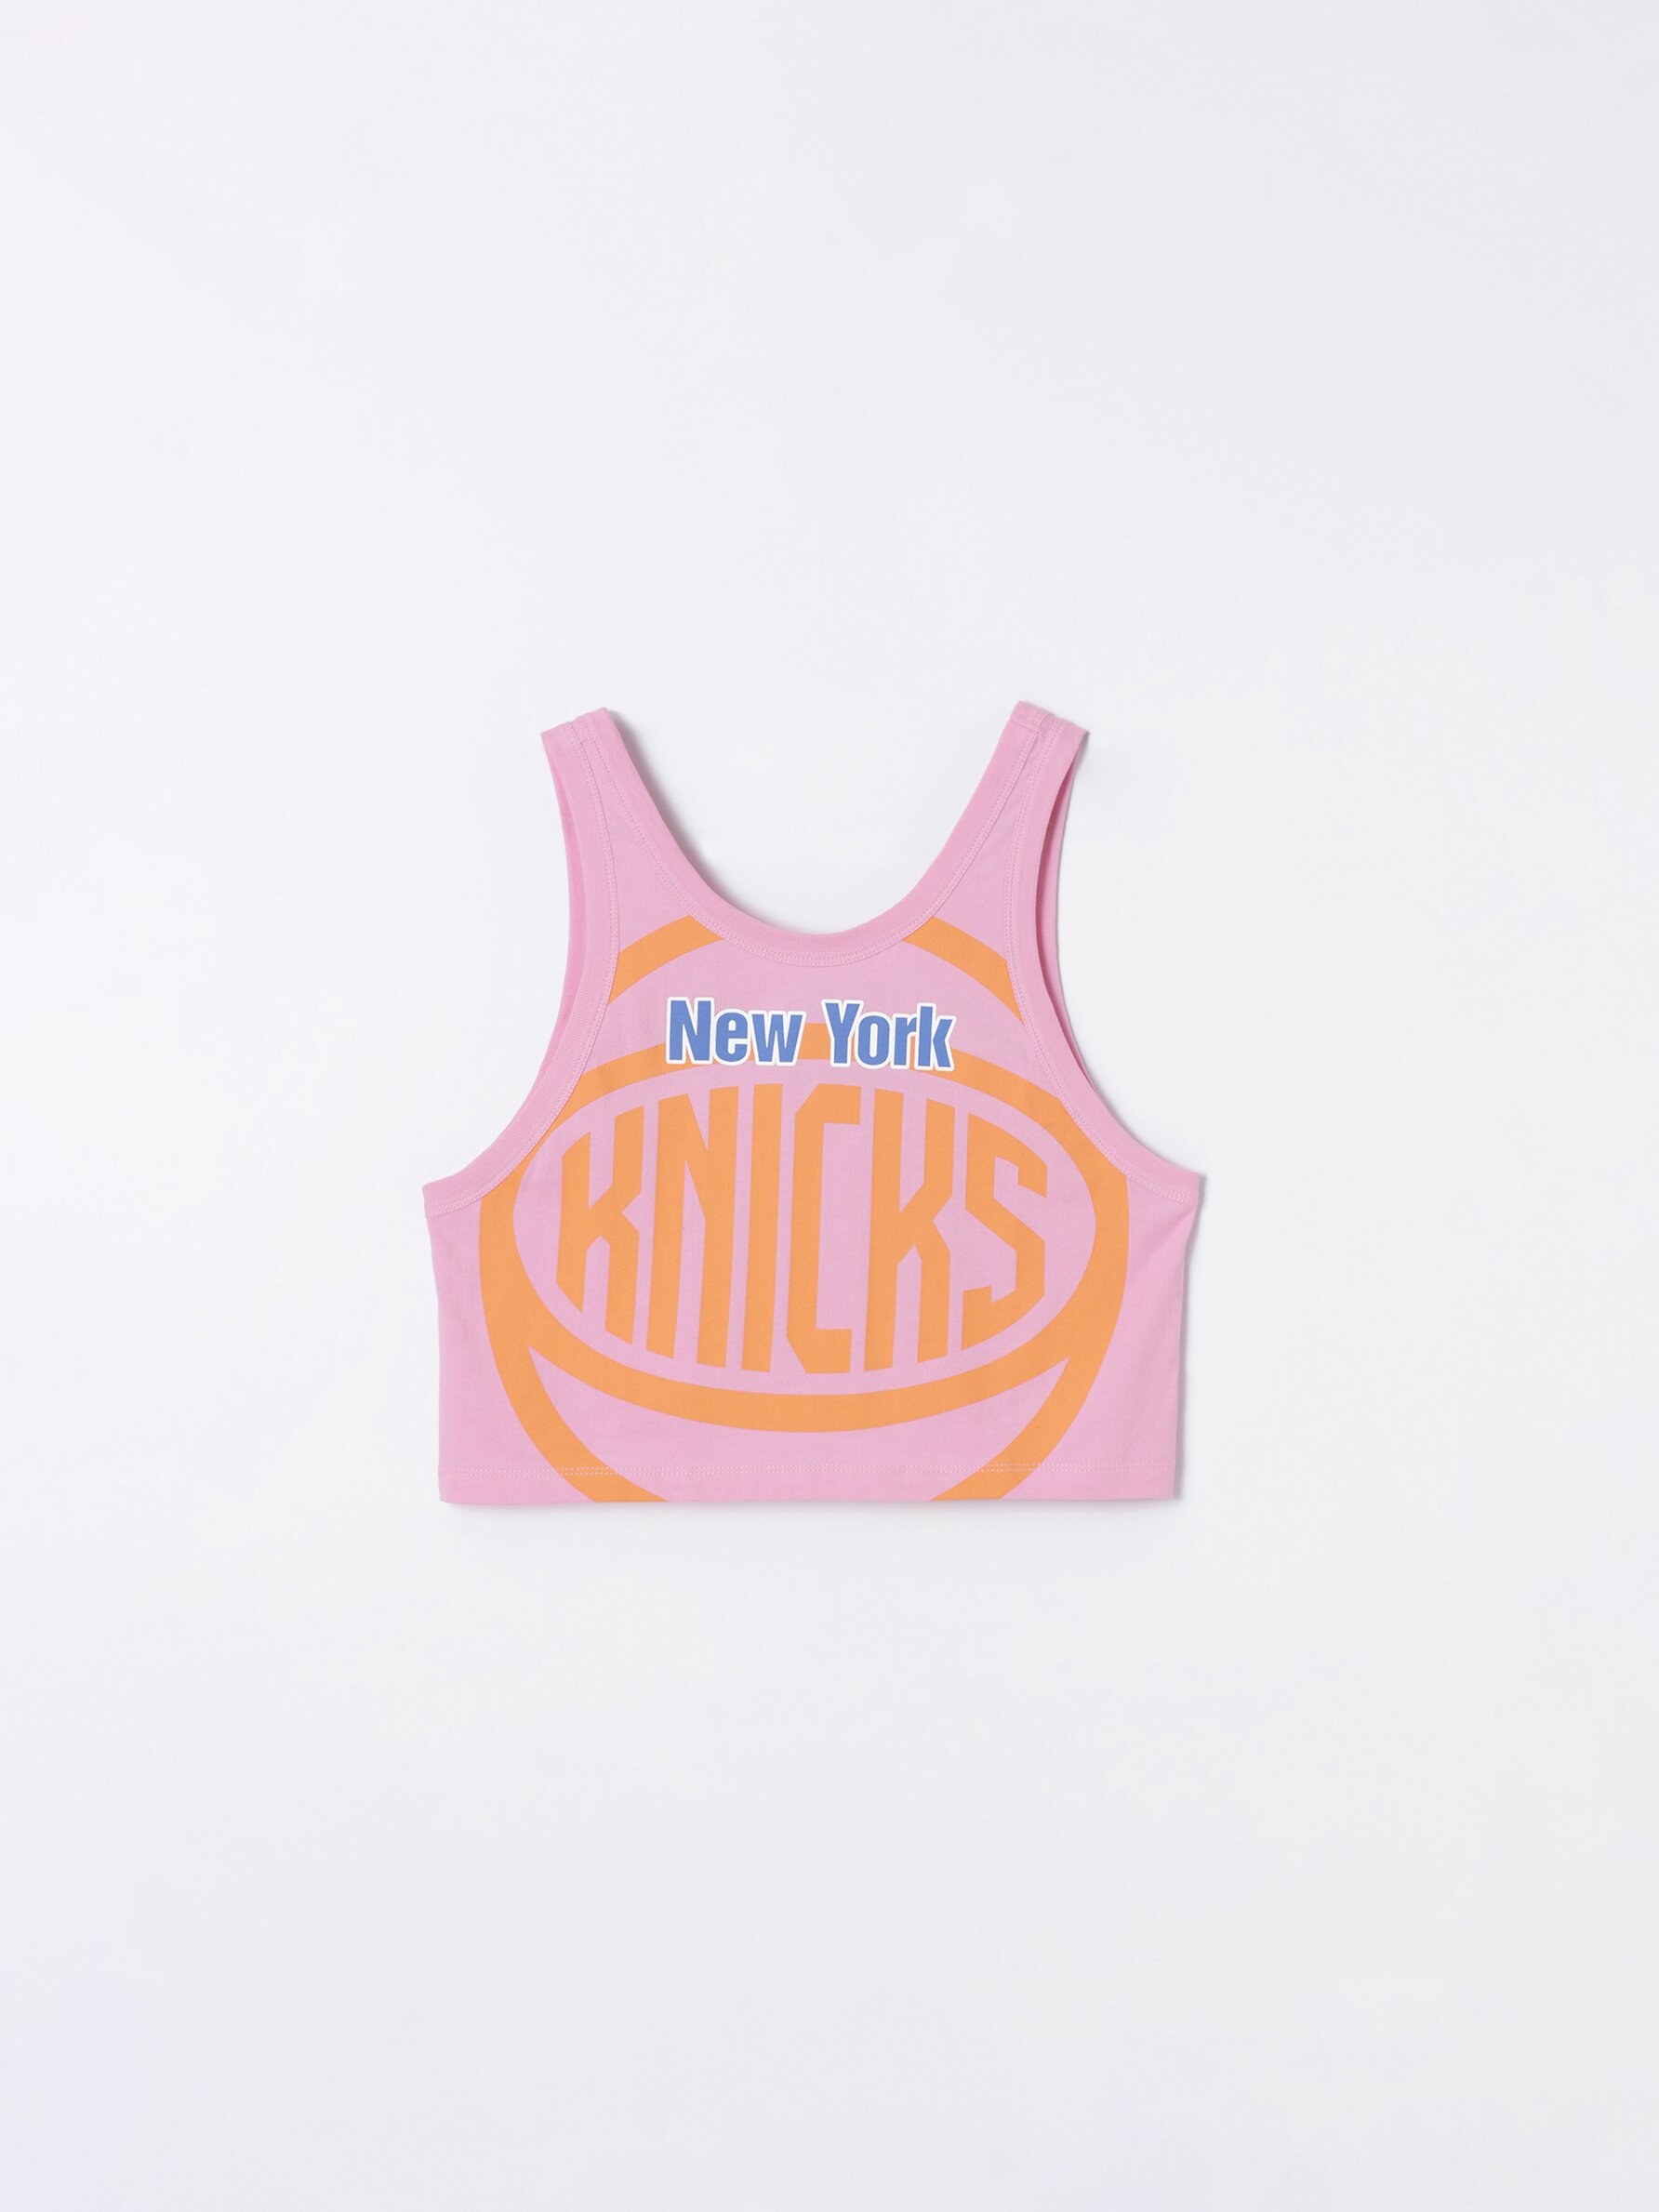 Women's New York Knicks Gear, Womens Knicks Apparel, Ladies Knicks Outfits